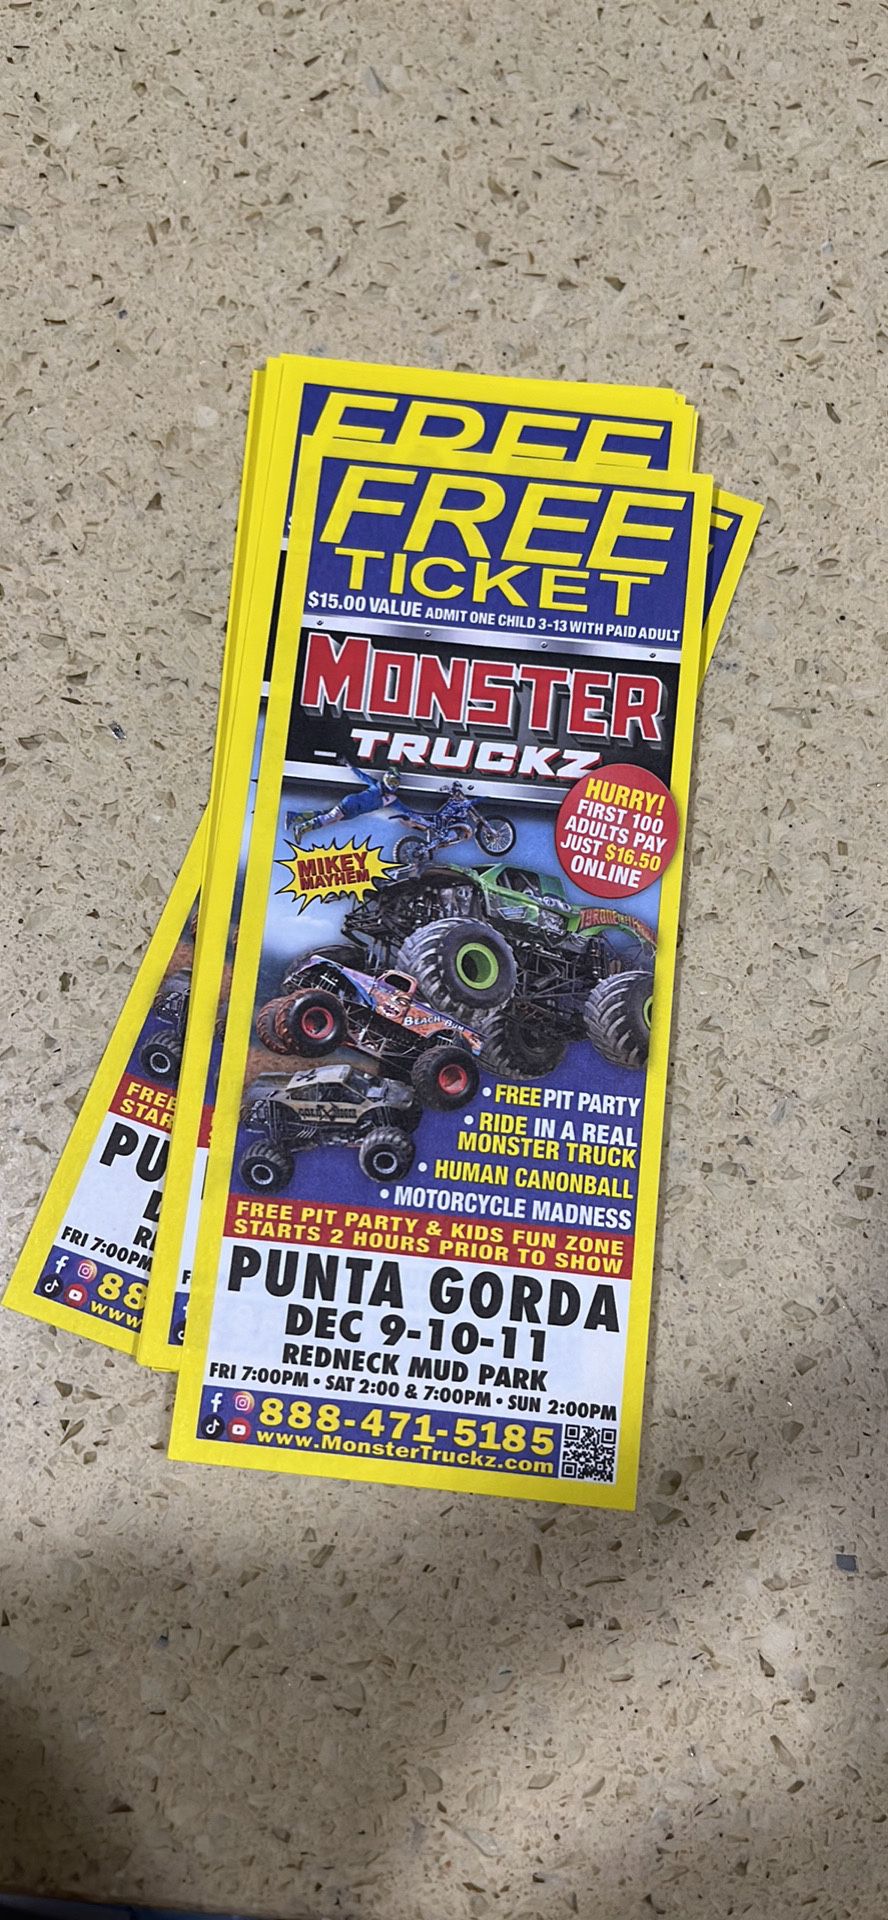 23 Tickets For Monster Truck On Punta Gorda 